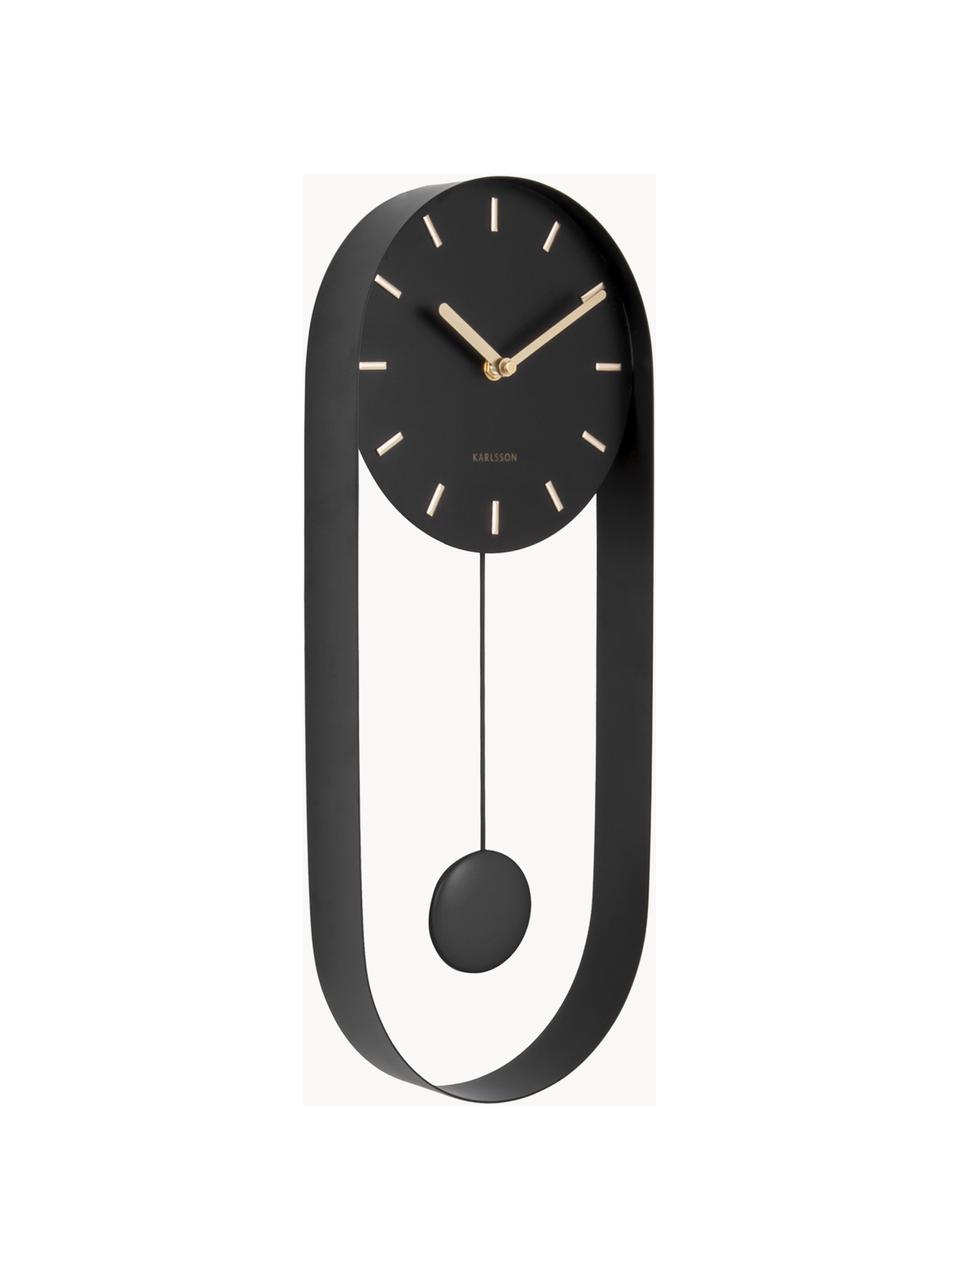 Reloj de pared Charm, Acero pintado, Gris antracita, An 20 x Al 50 cm